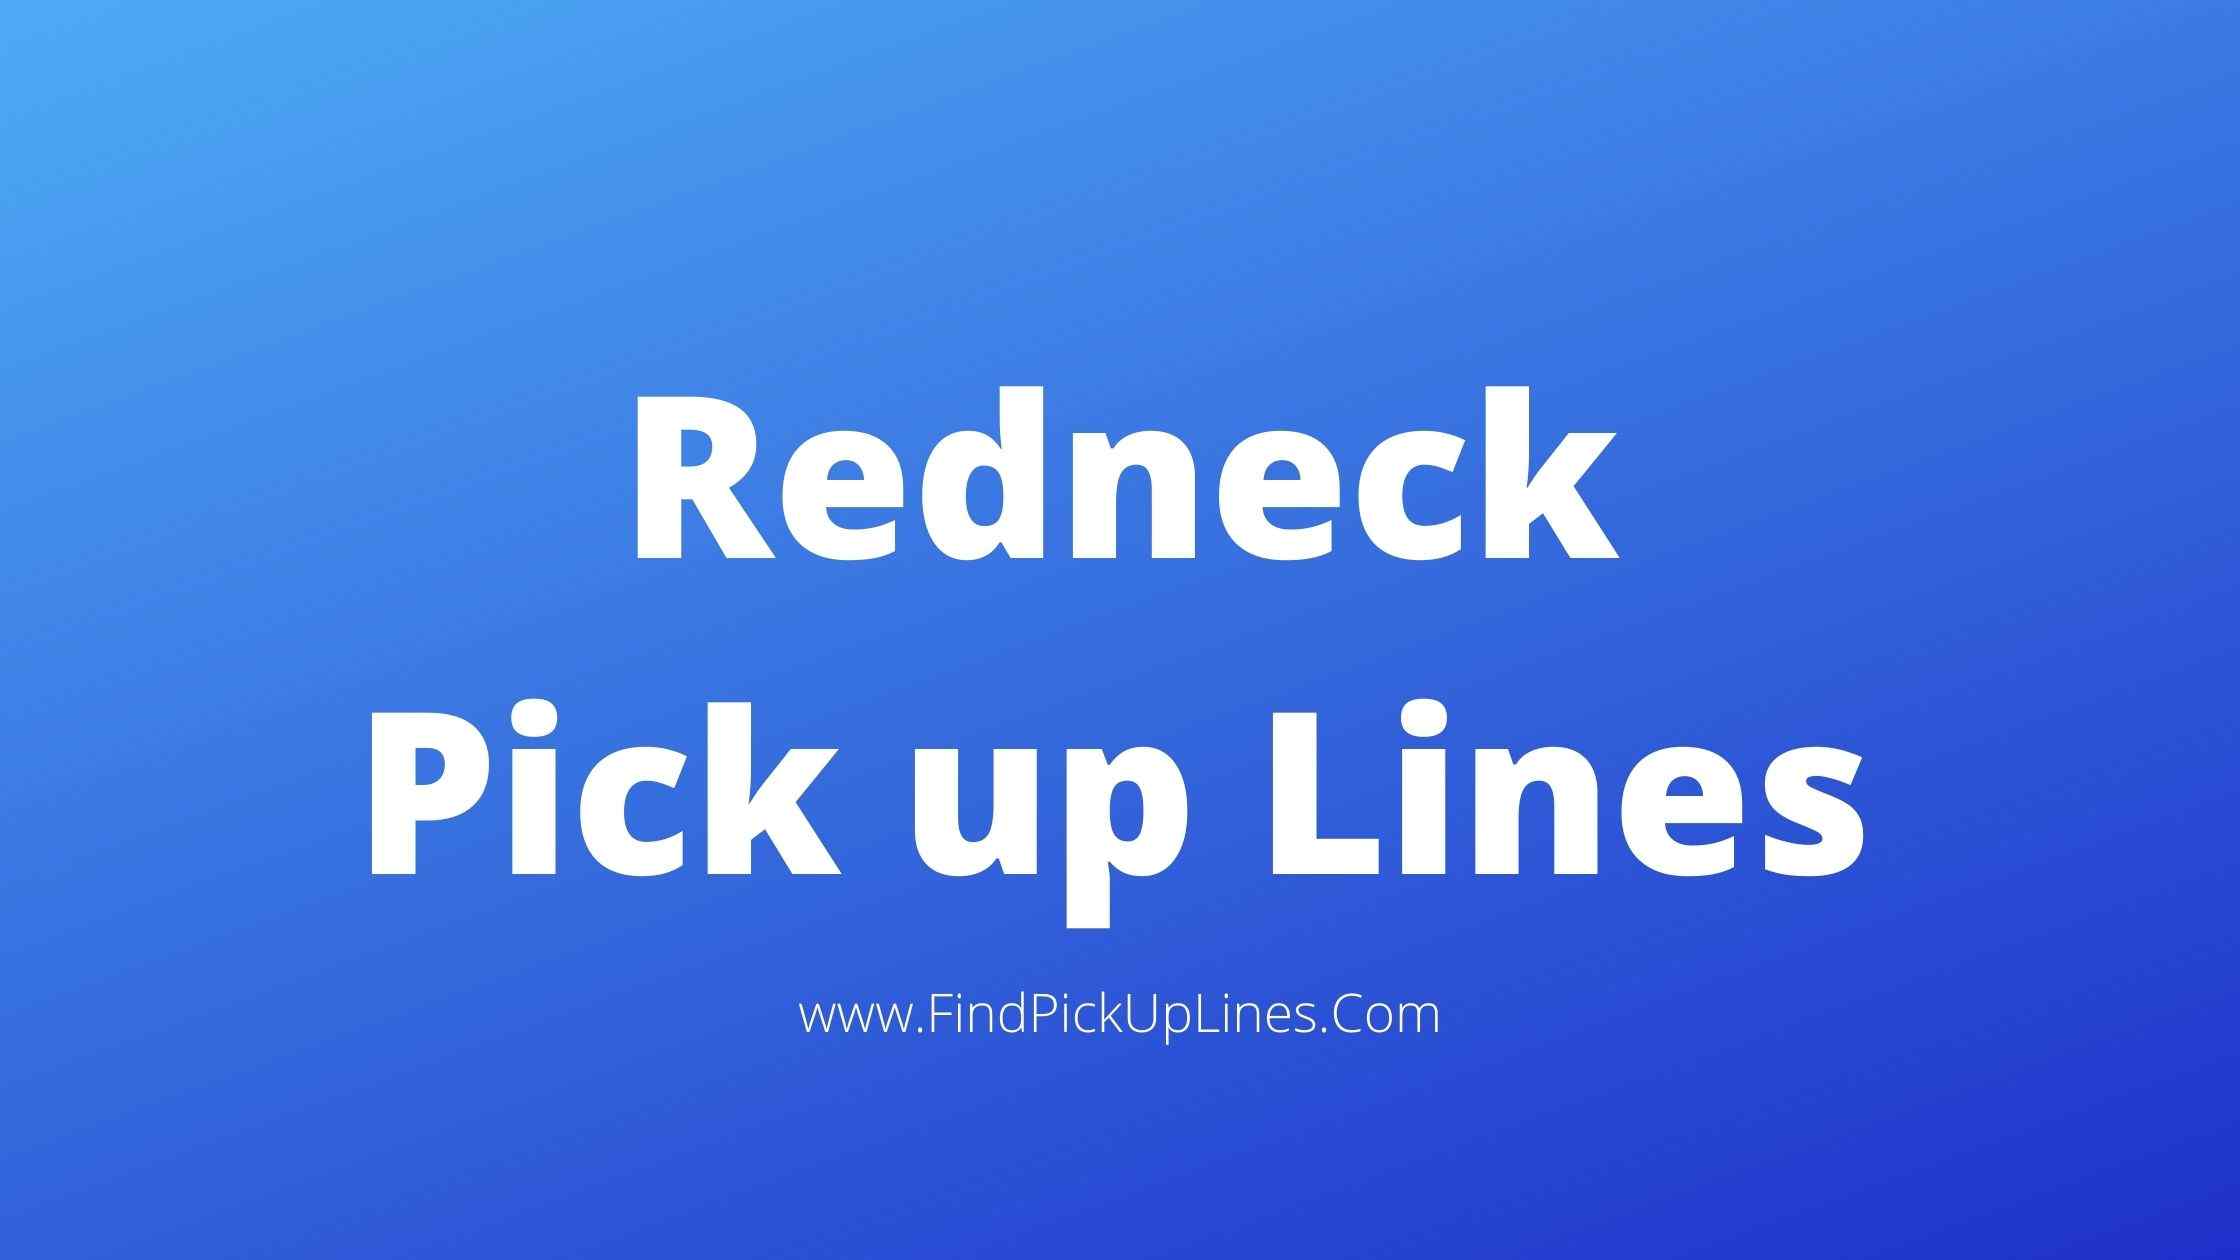 Redneck Pick up Lines